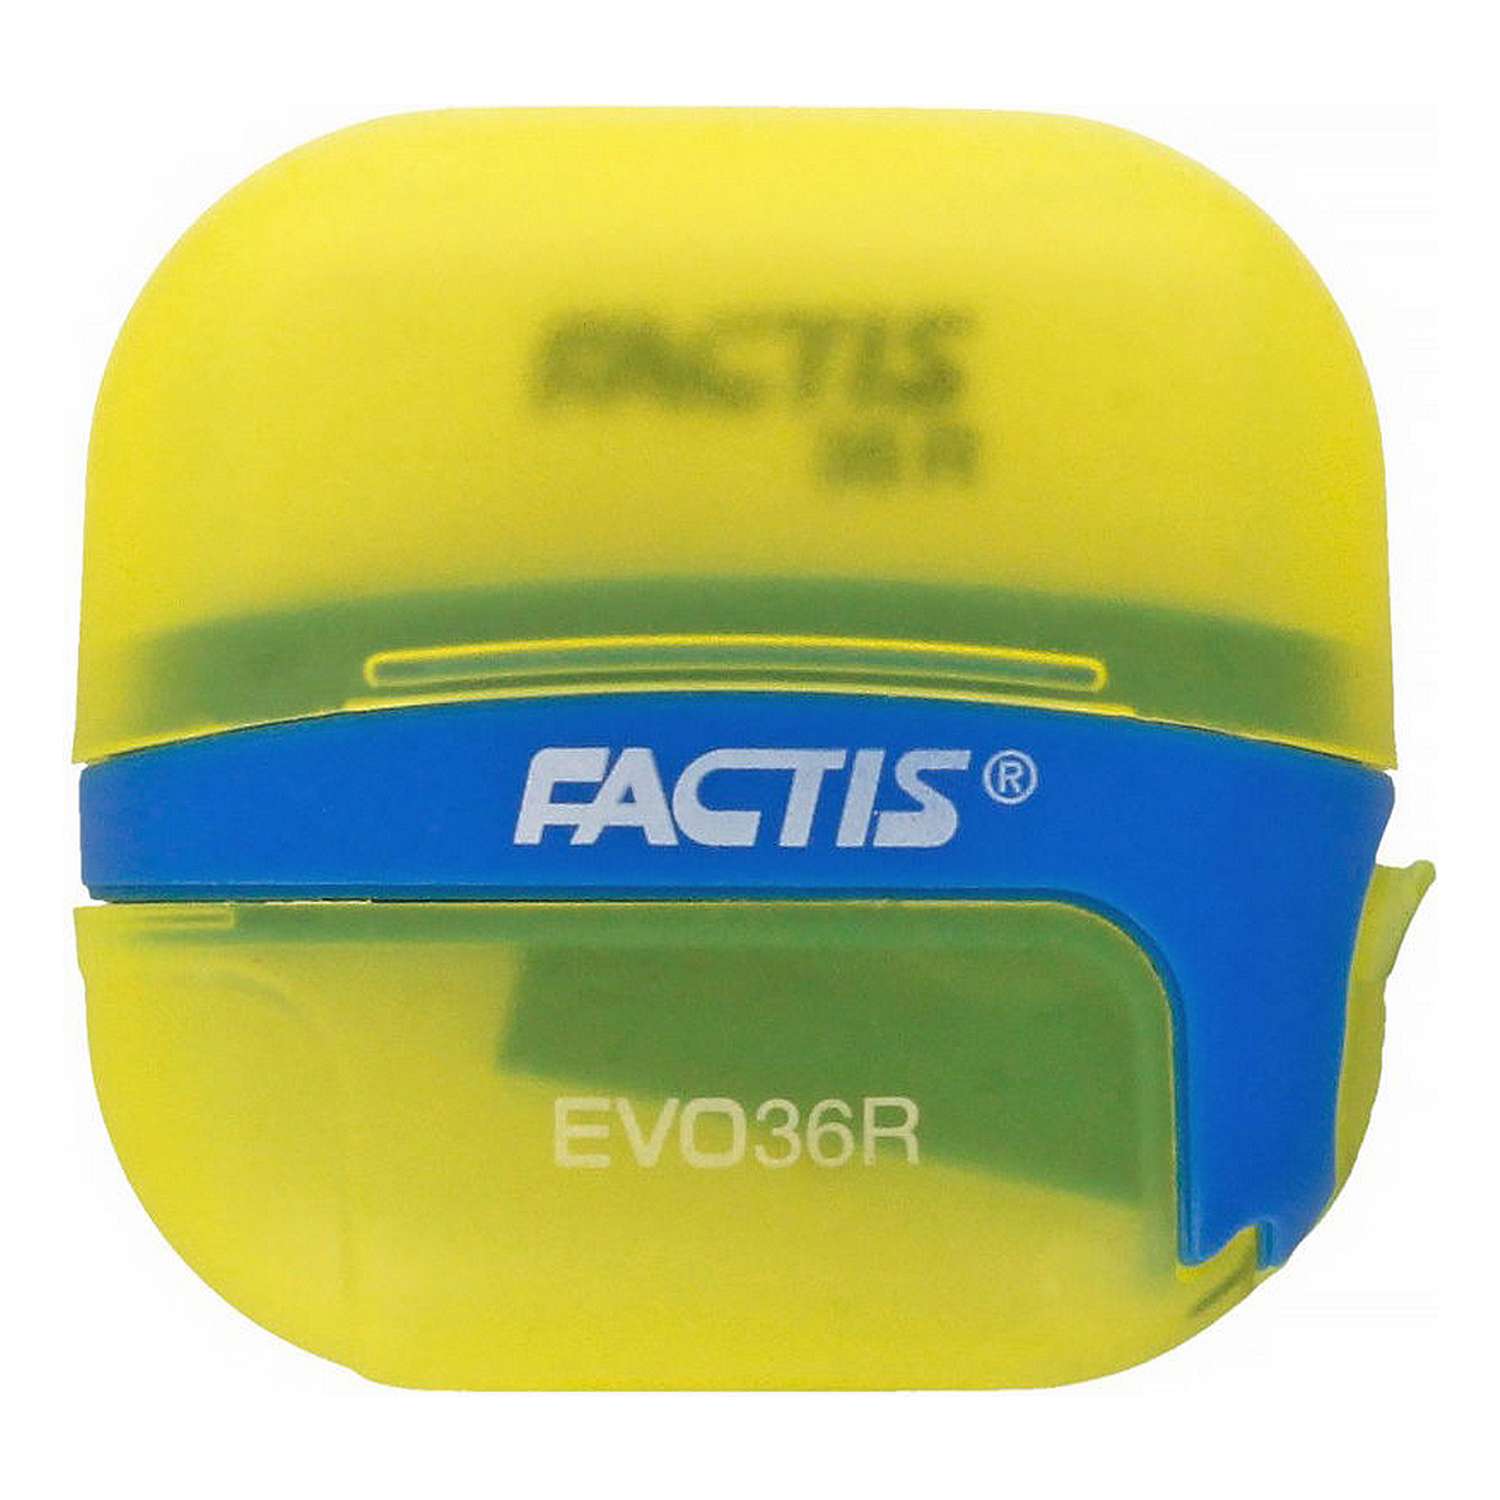 Точилка FACTIS EVO36R с ластиком желтого цвета F4707116 - фото 1